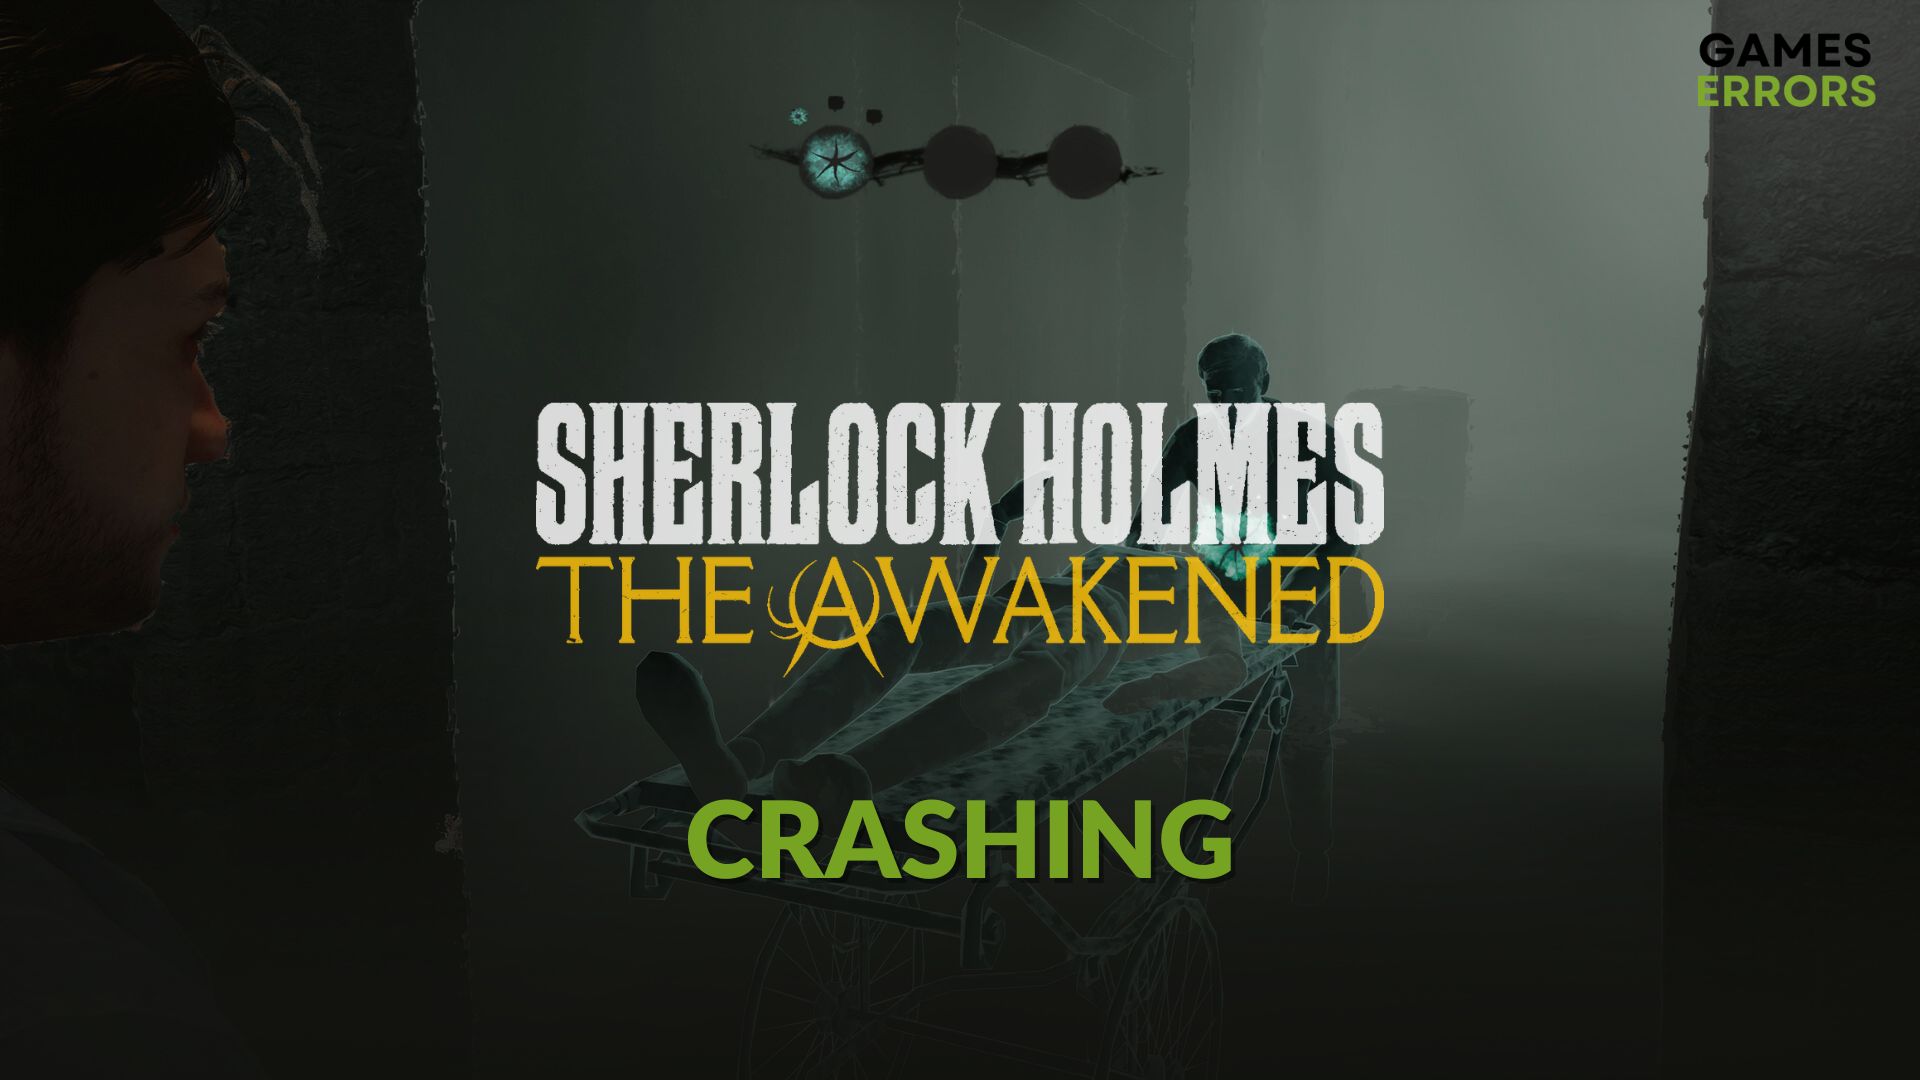 How to Fix Sherlock Holmes The Awakened crashing